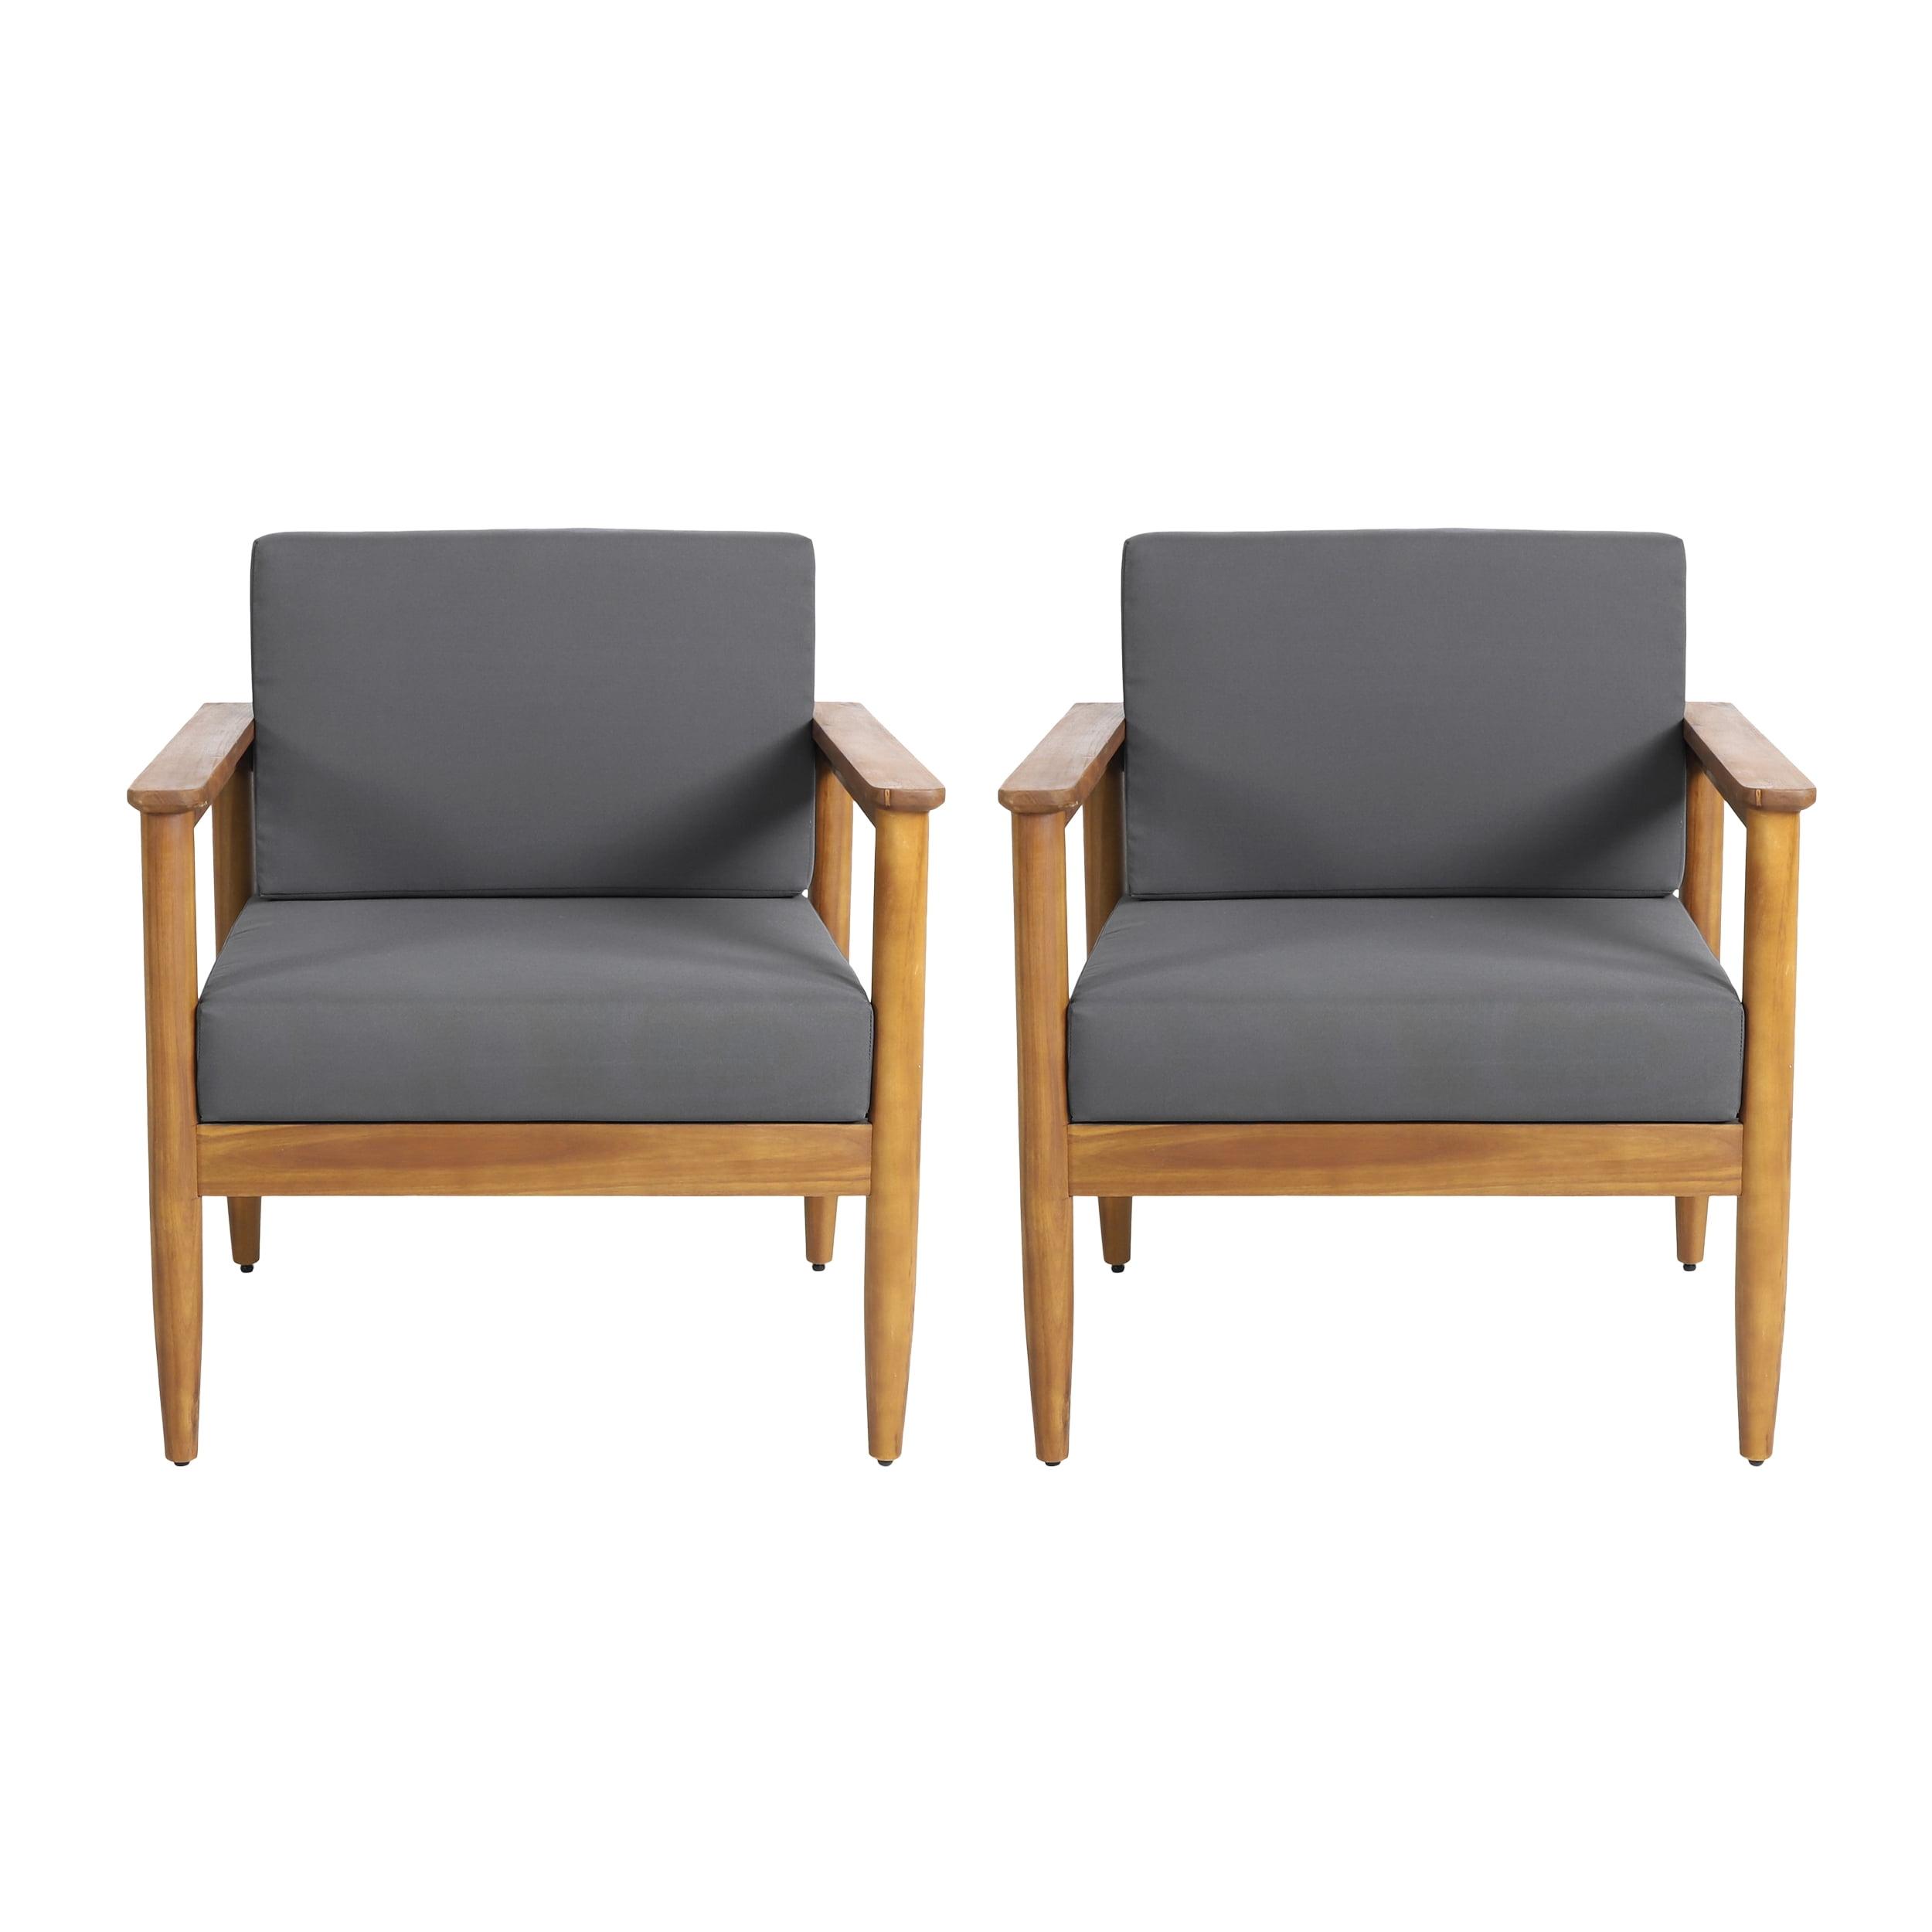 Teak Brown Acacia Wood Outdoor Lounge Chair with Dark Grey Cushions